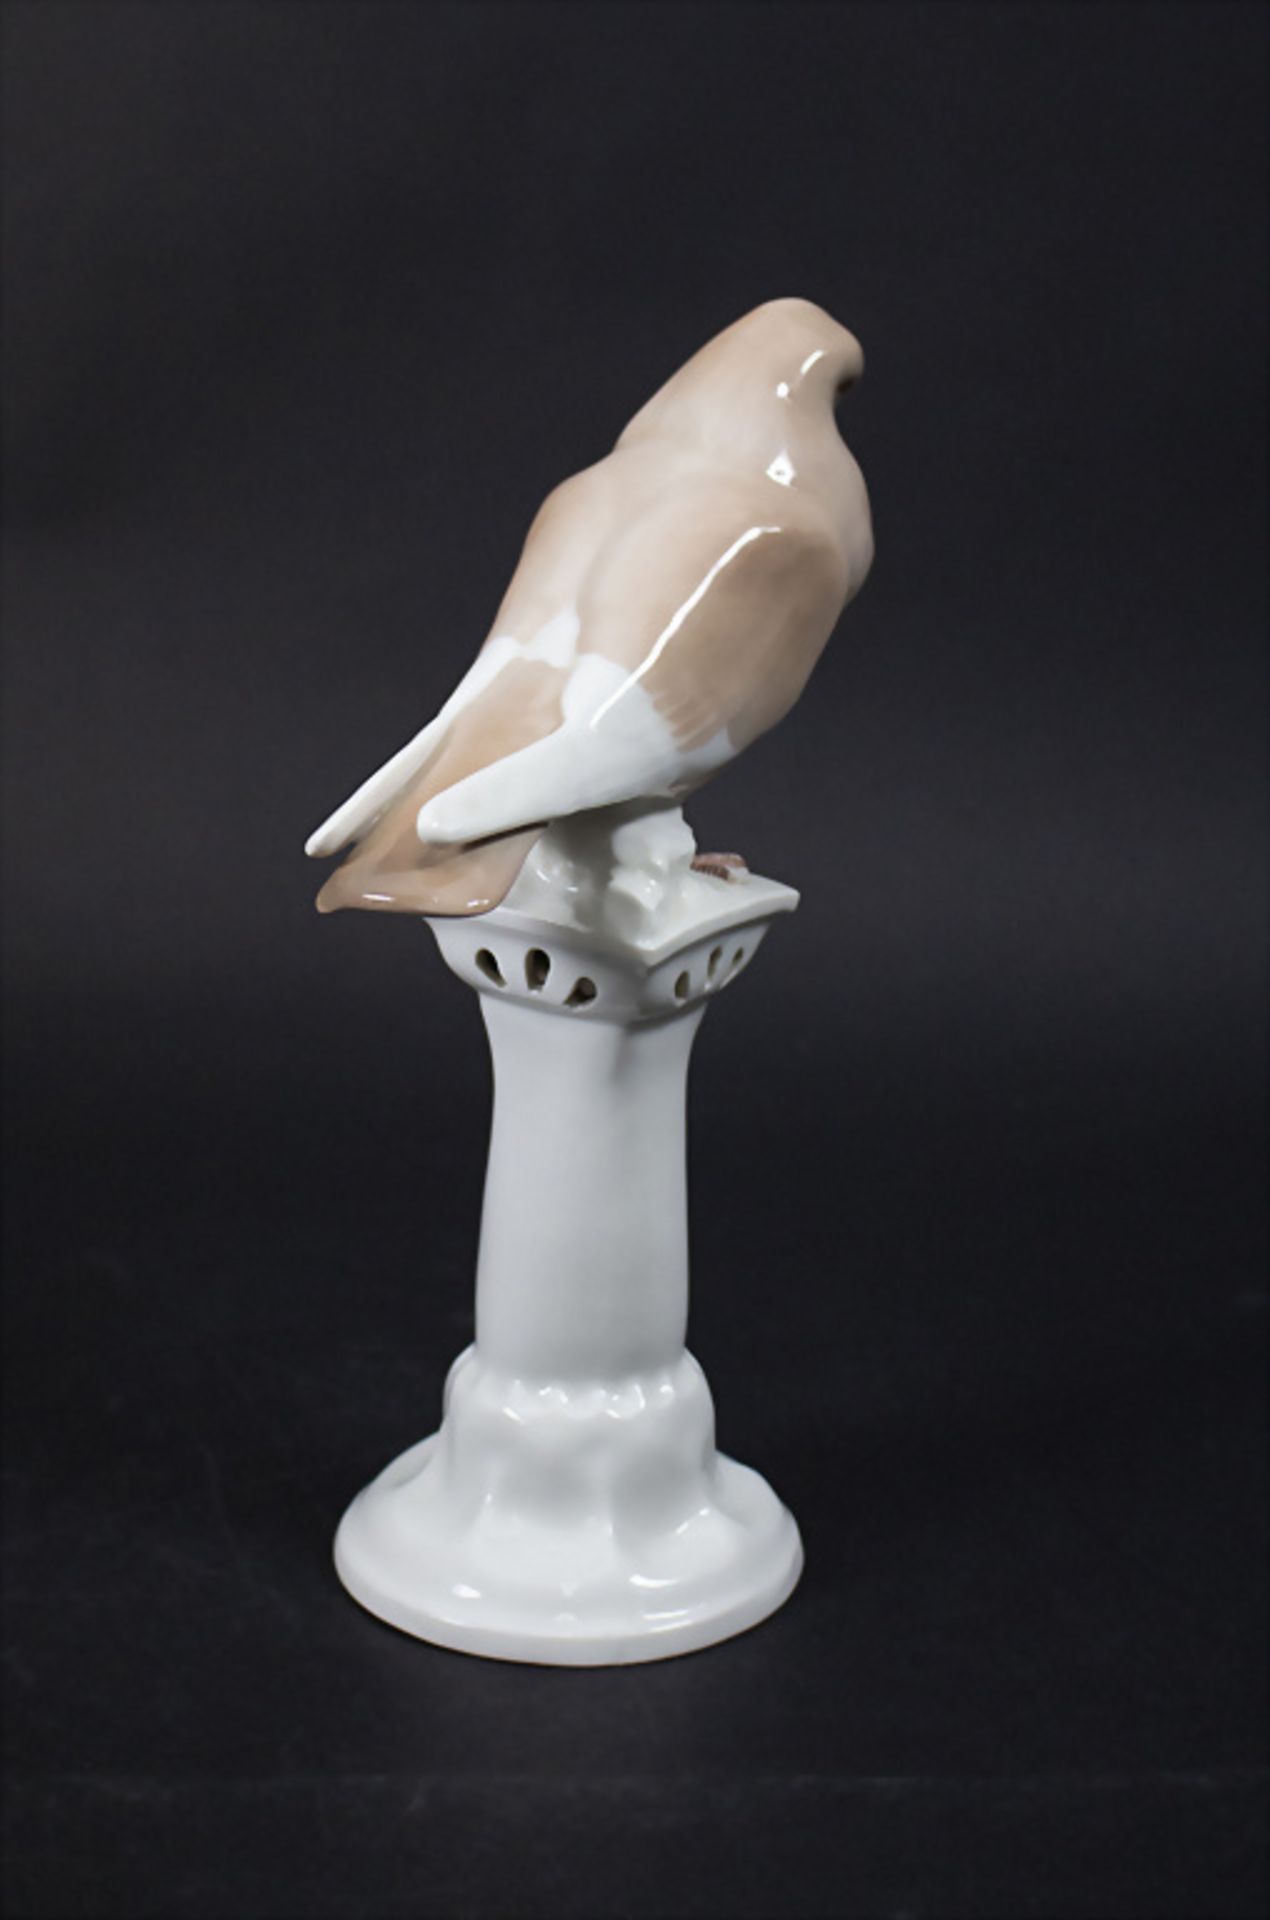 Jugendstil Vogelfigur 'Taube auf Postament' / An Art Nouveau bird figure of a pigeon on a ... - Image 5 of 6